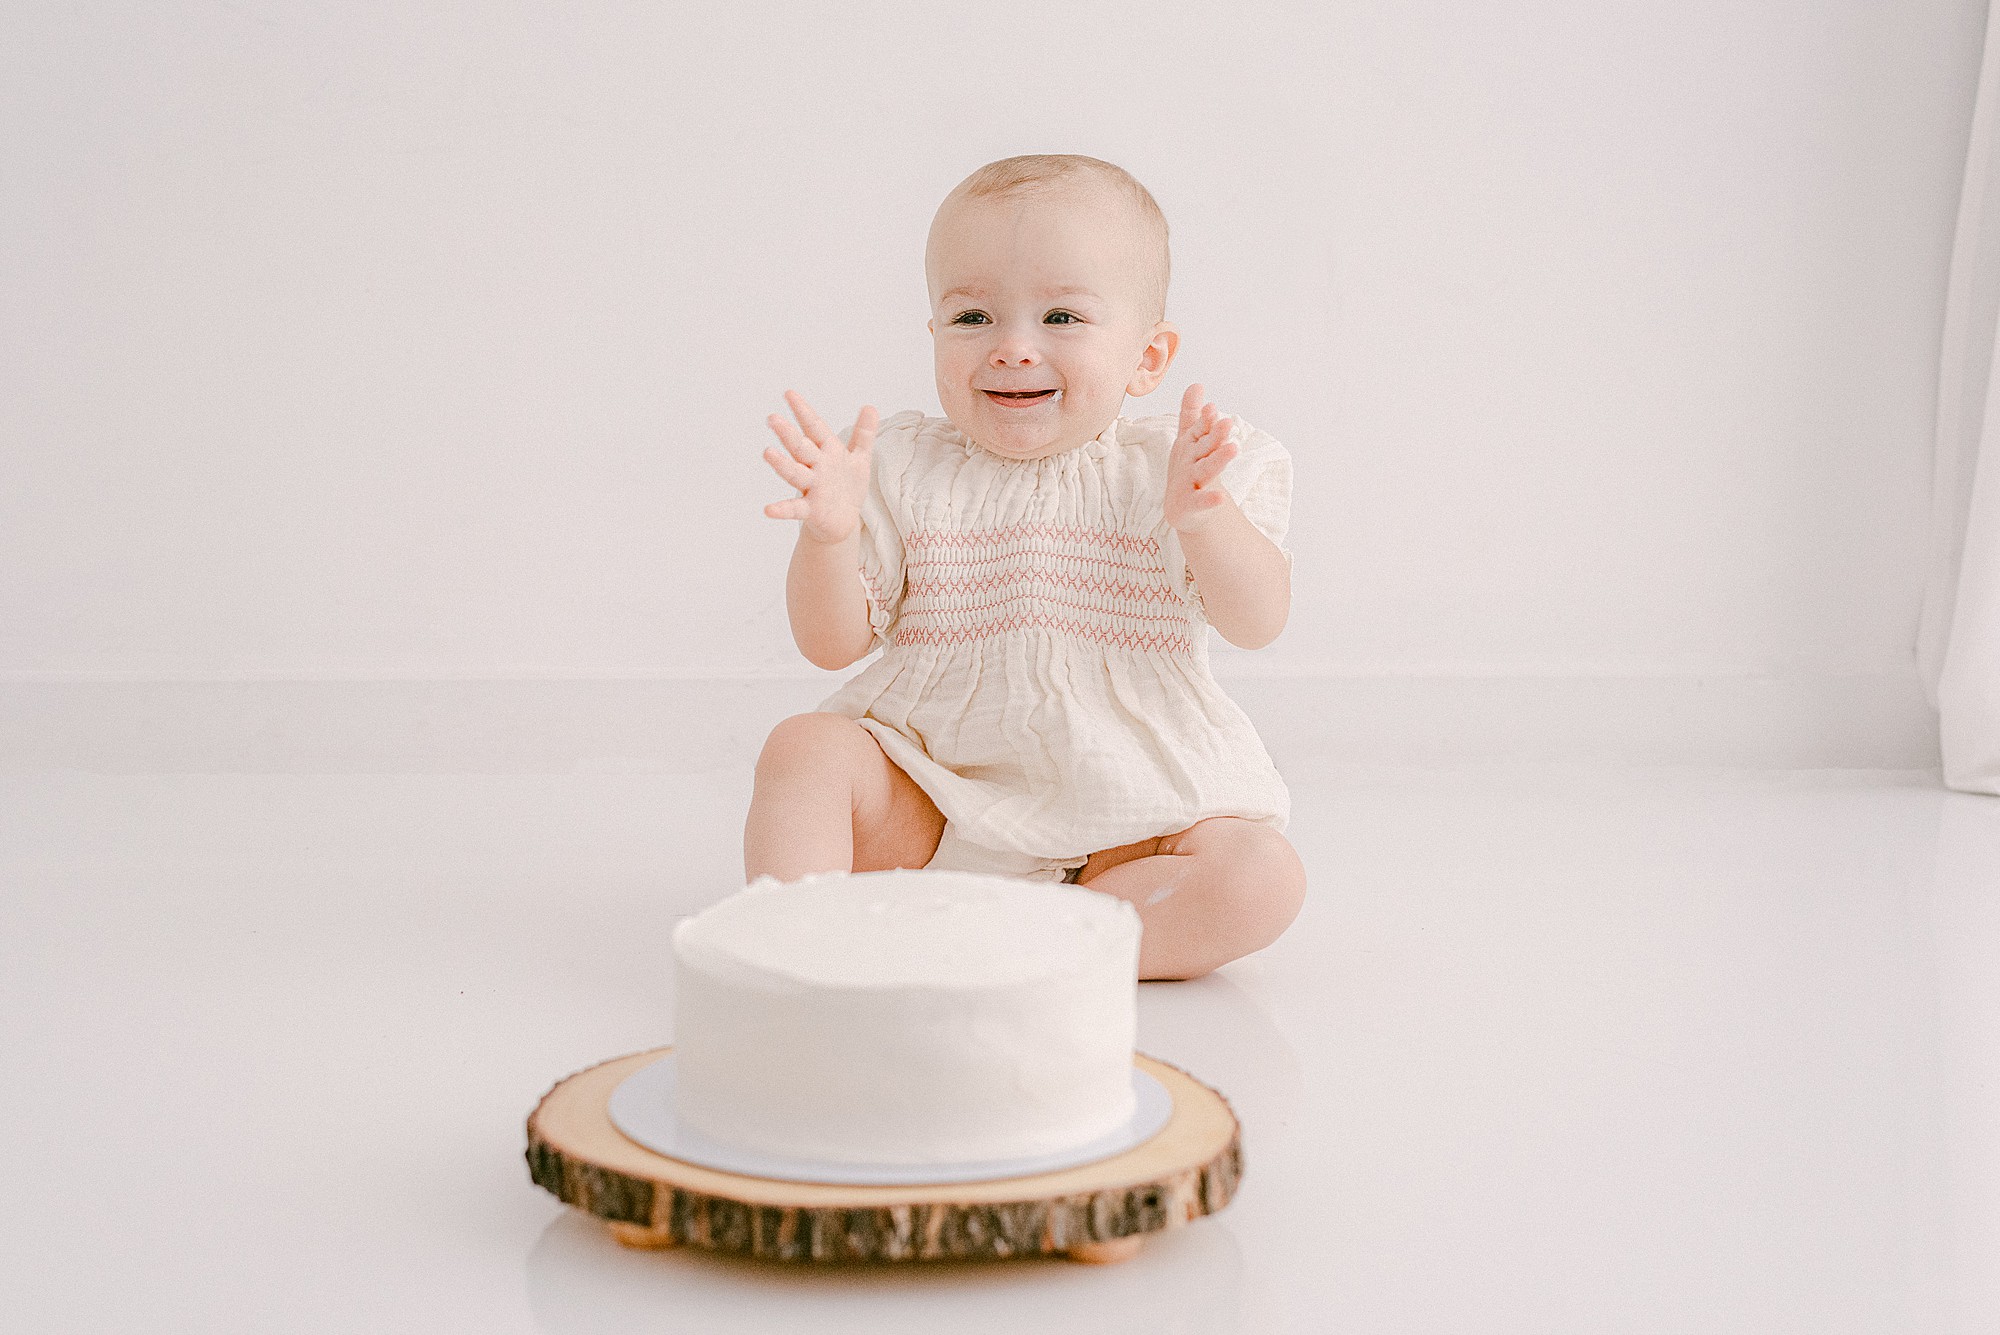 Baby's first-year cake smash photoshoot with plain white cake